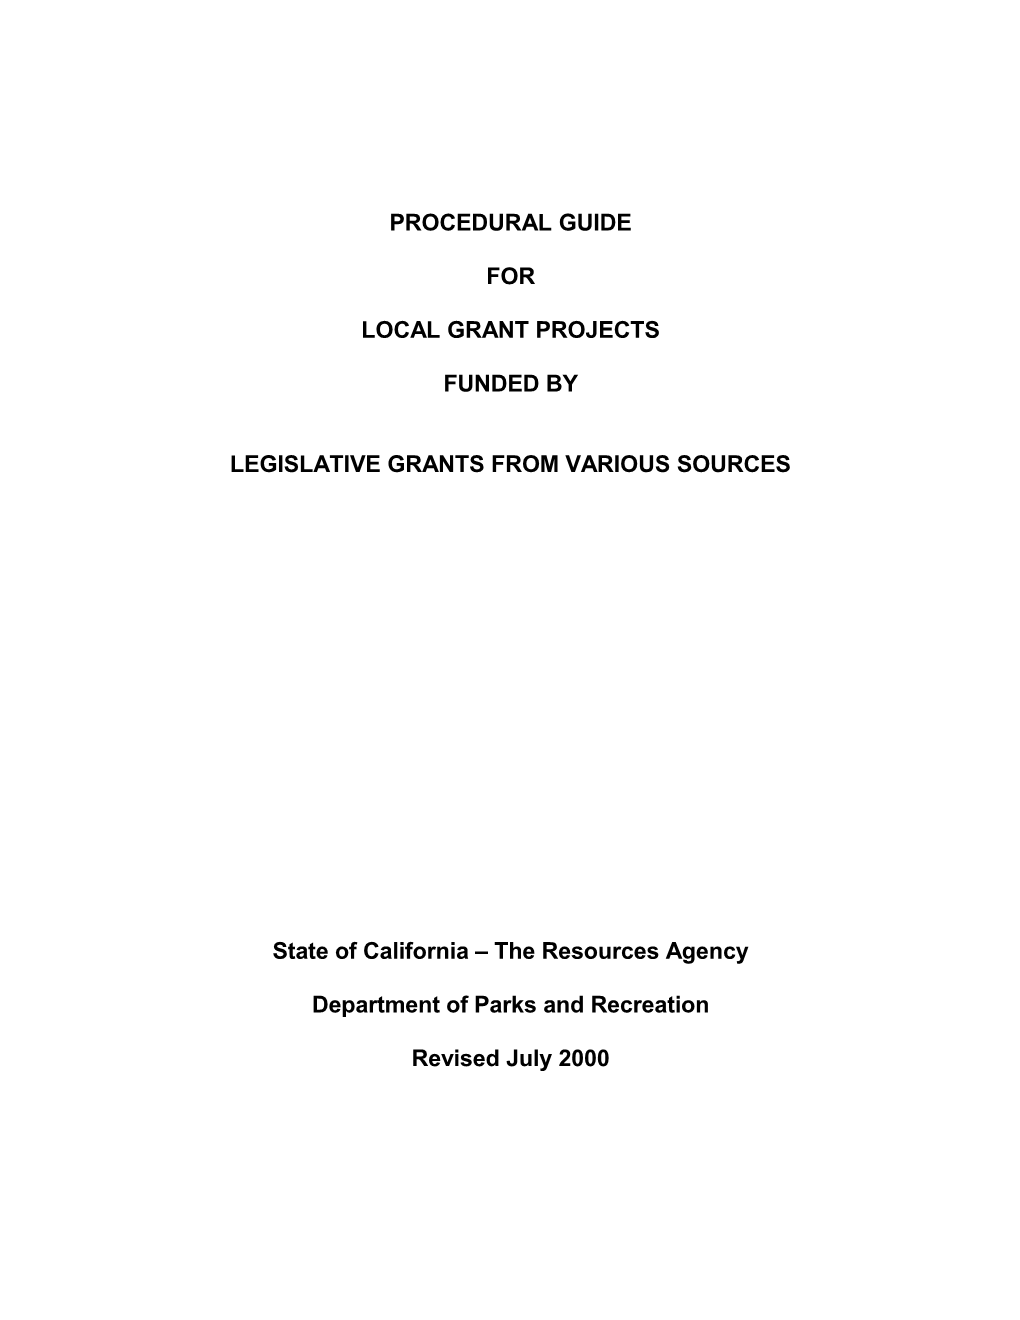 Legislative Grants from Various Sources